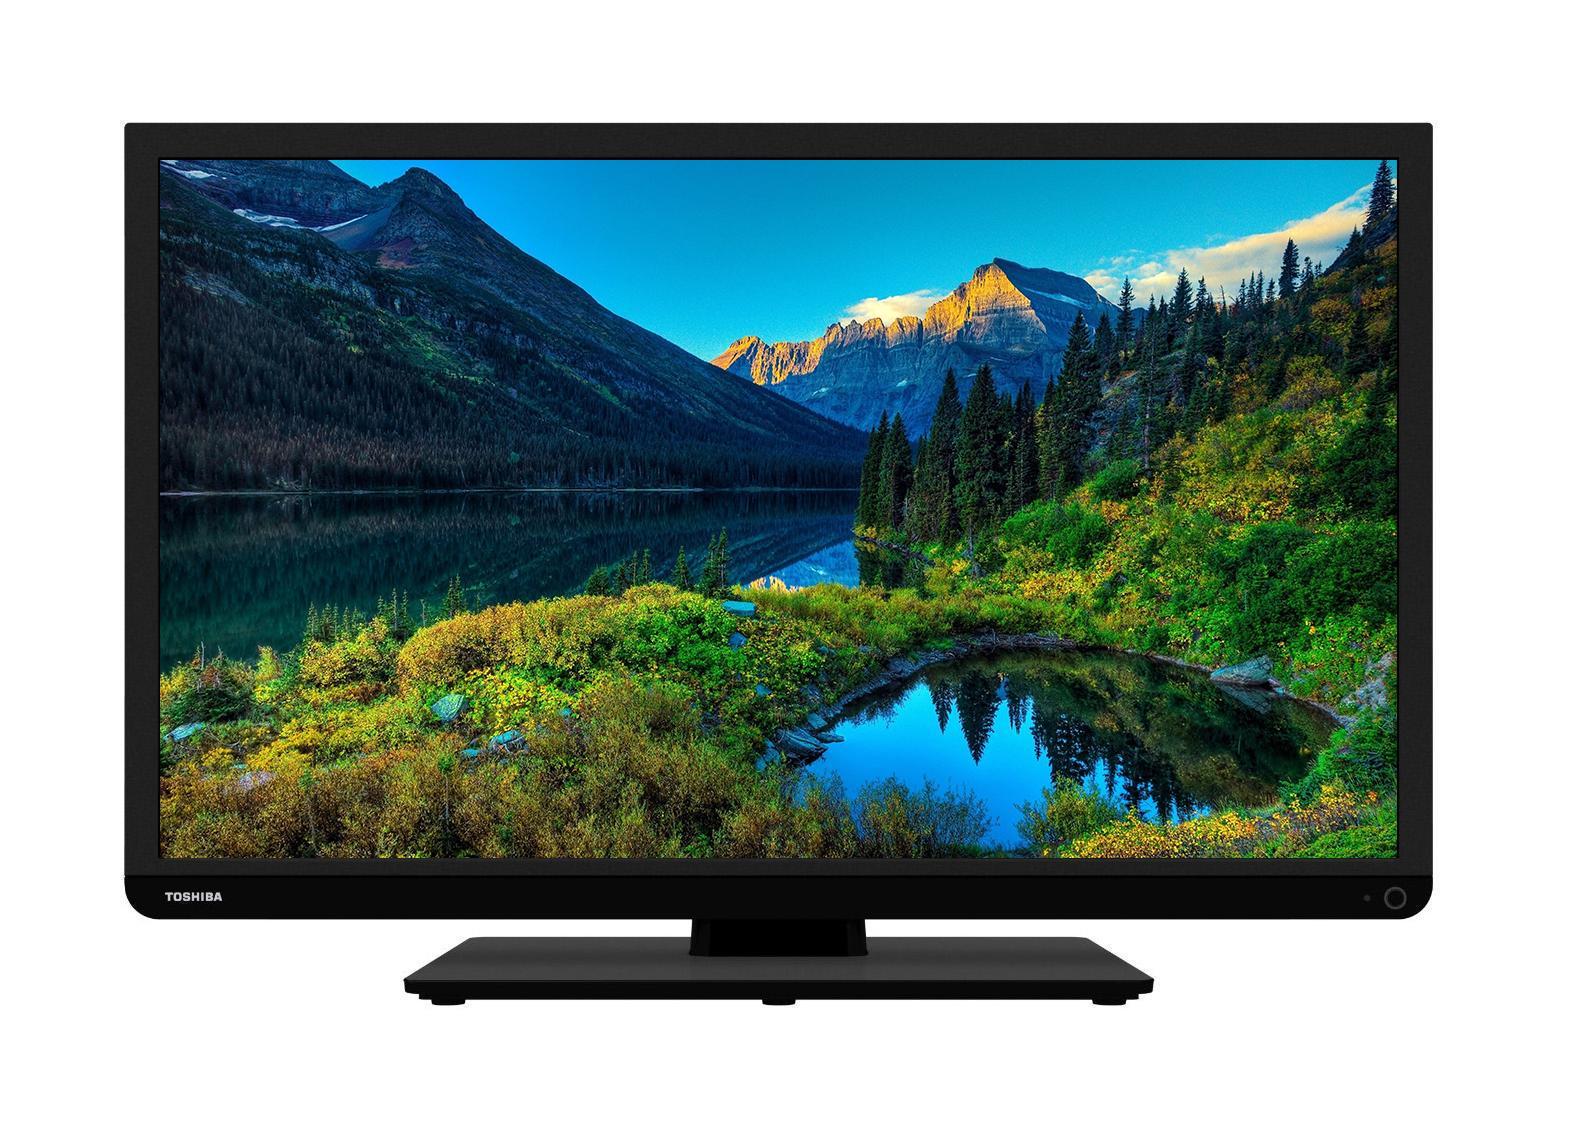 Телевизоры 32 дюйма купить в спб недорого. Toshiba 40l3453r. Телевизор Тошиба 40l3453r. Toshiba 32 Smart TV. ЖК телевизор Тошиба 32 дюйма.